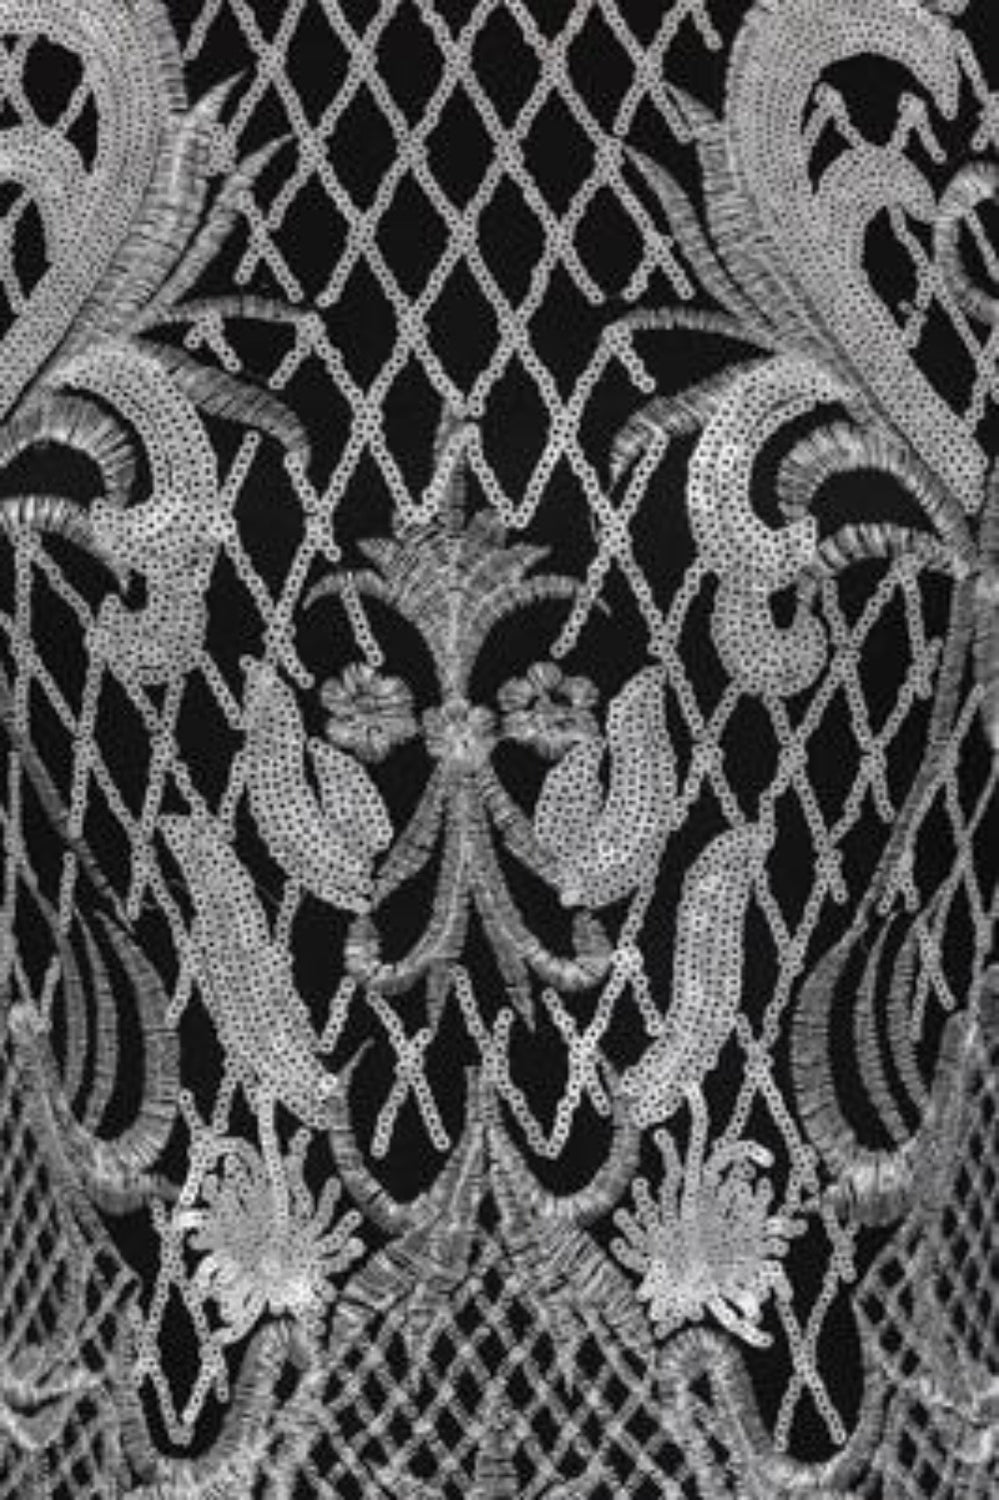 Marina Silver Embroidery & Sequin Bodycon Flared Sleeve Midi Dress